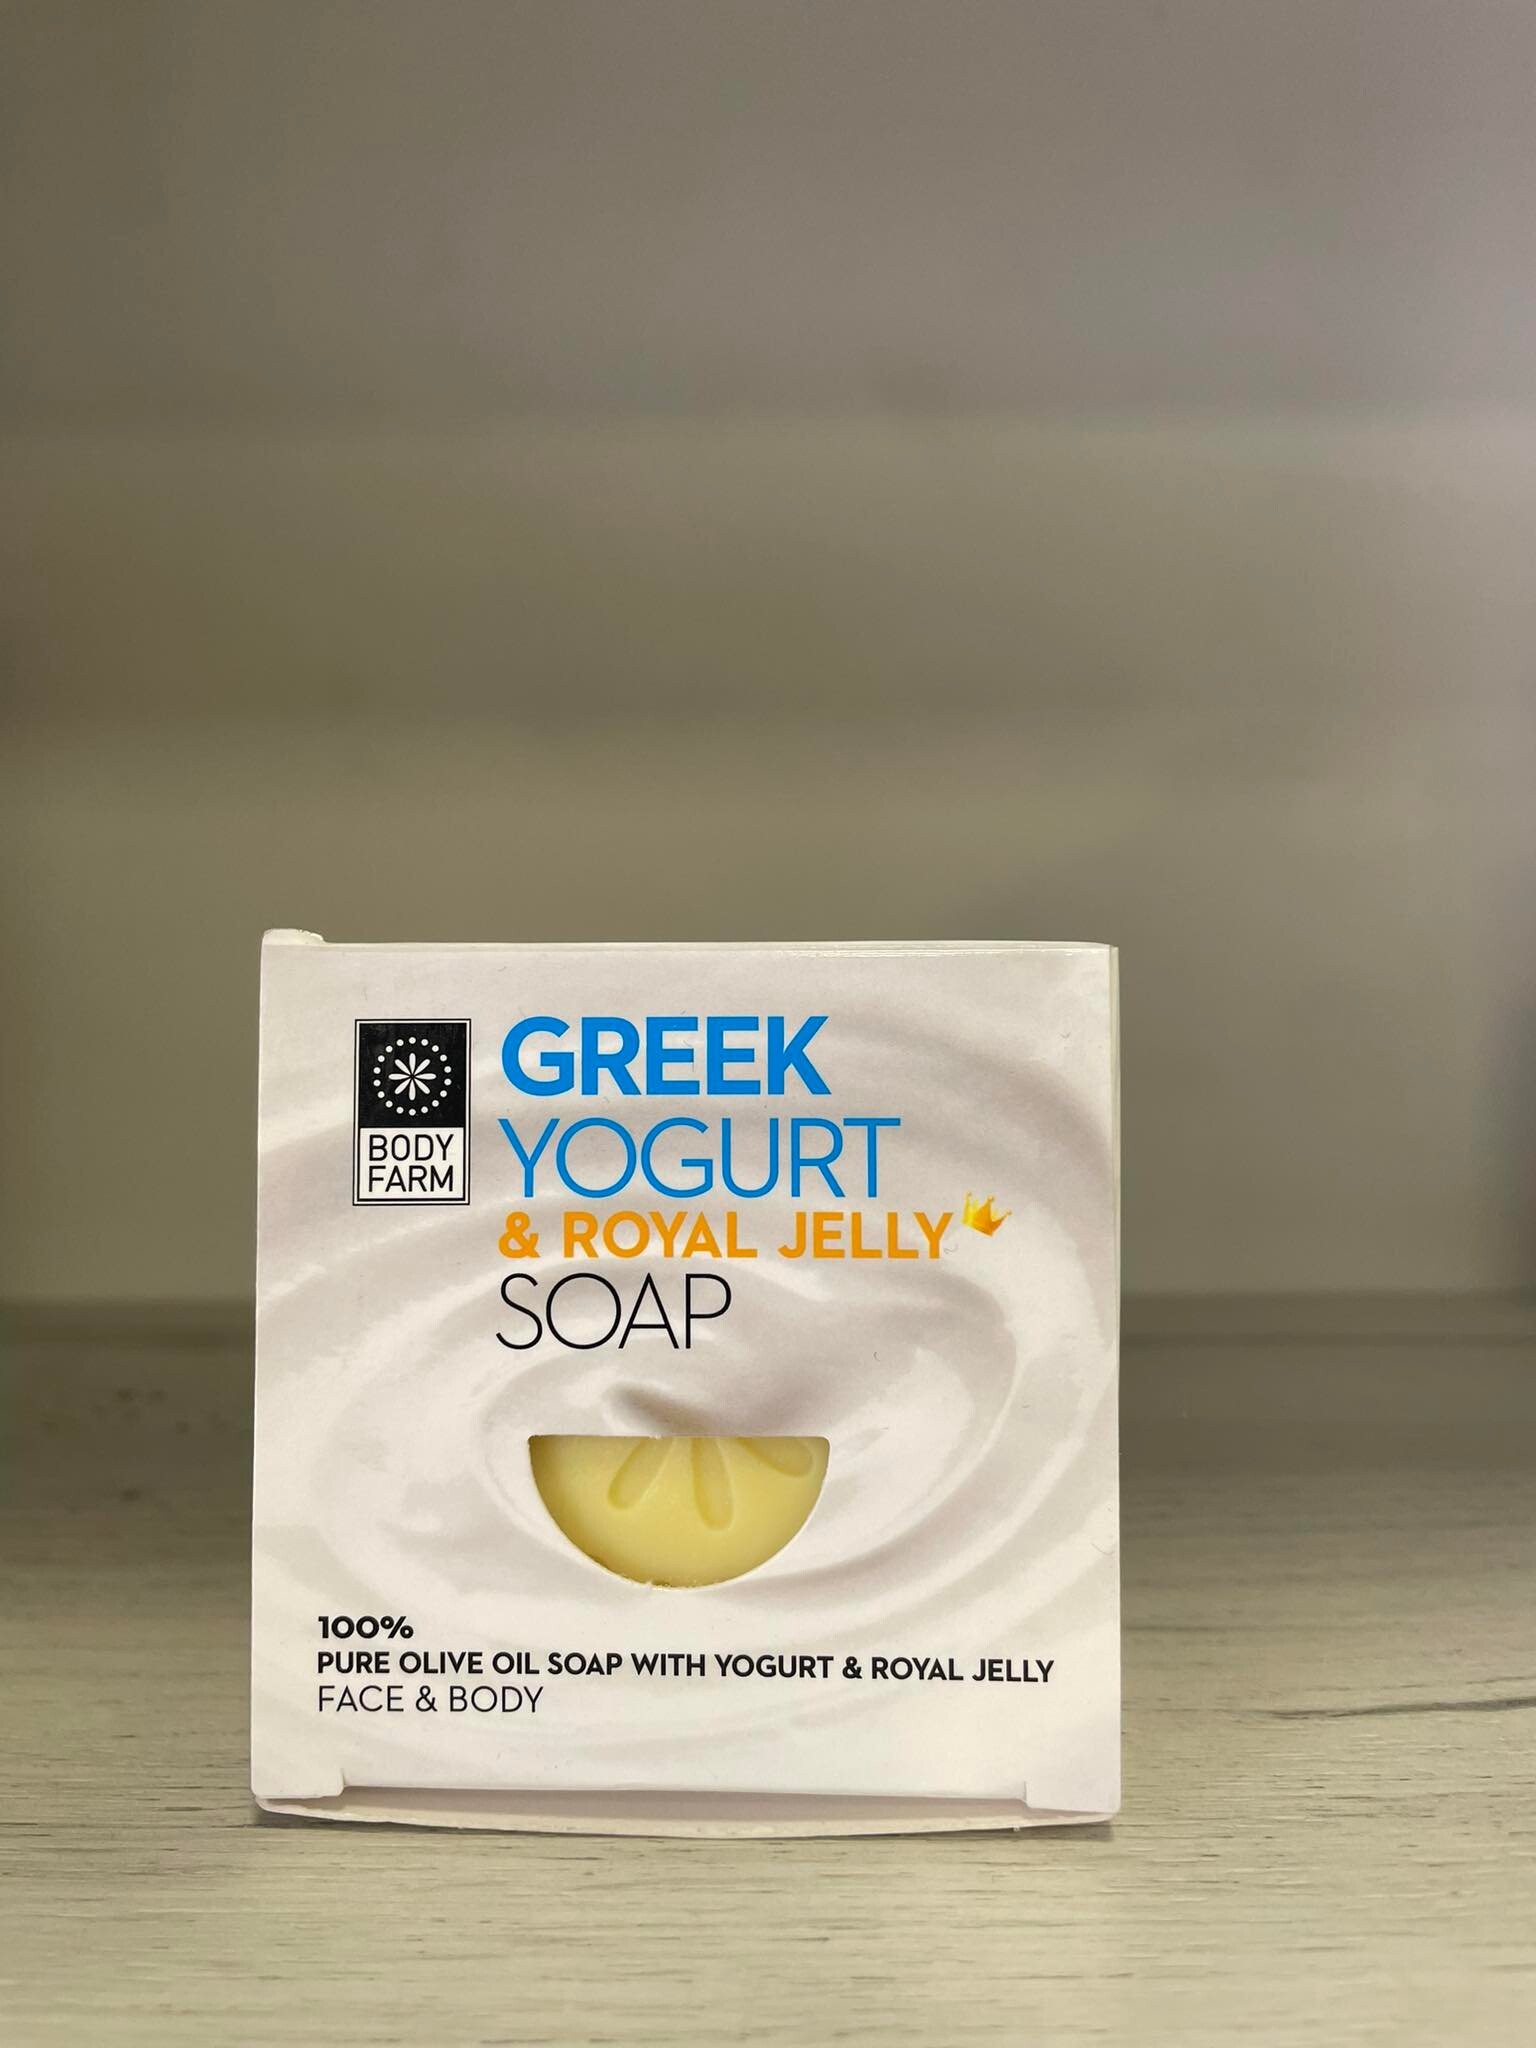 BODYFARM- GREEK YOGURT & ROYAL JELLY SOAP